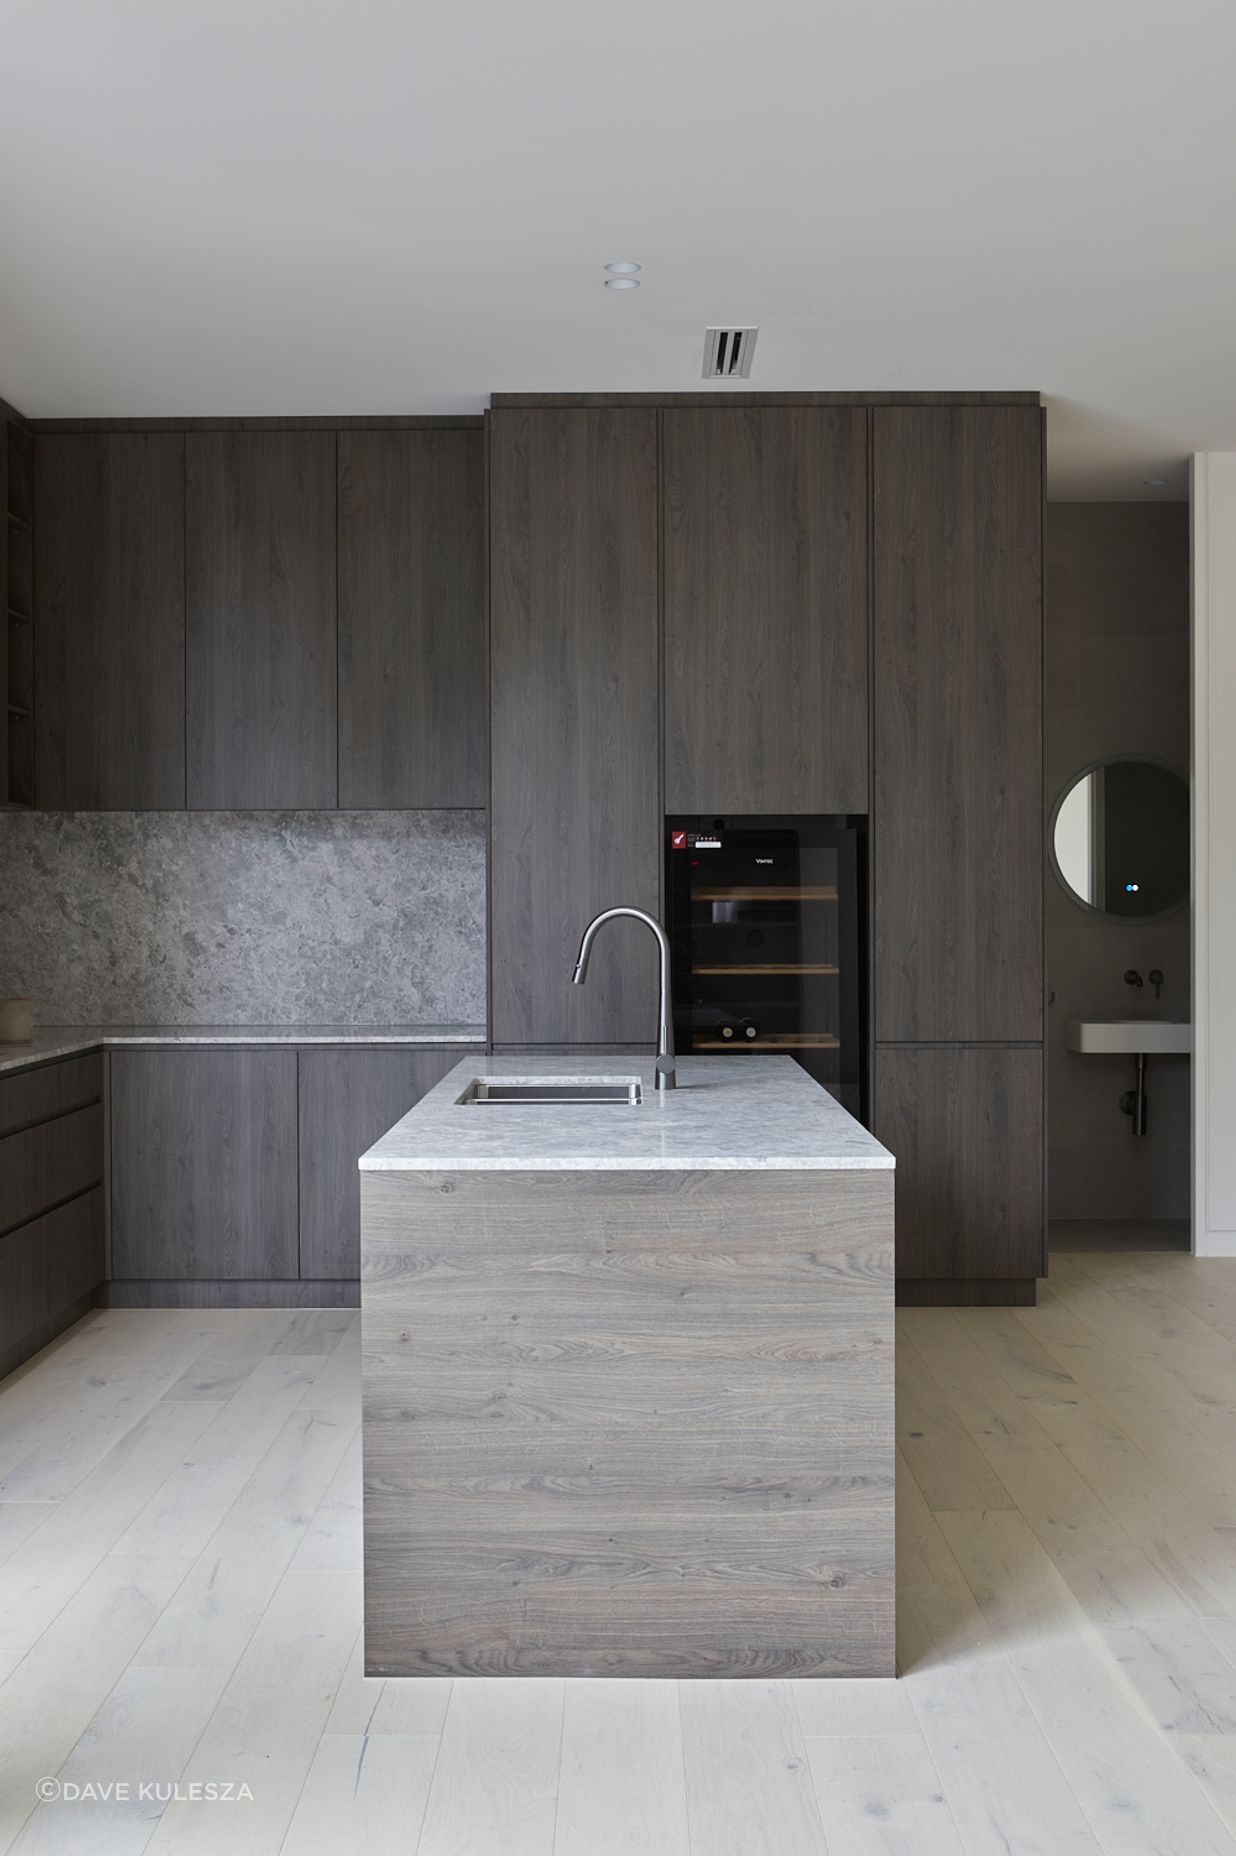 Floor to ceiling Nikpol designer cabinetry soften the built-in black appliances.